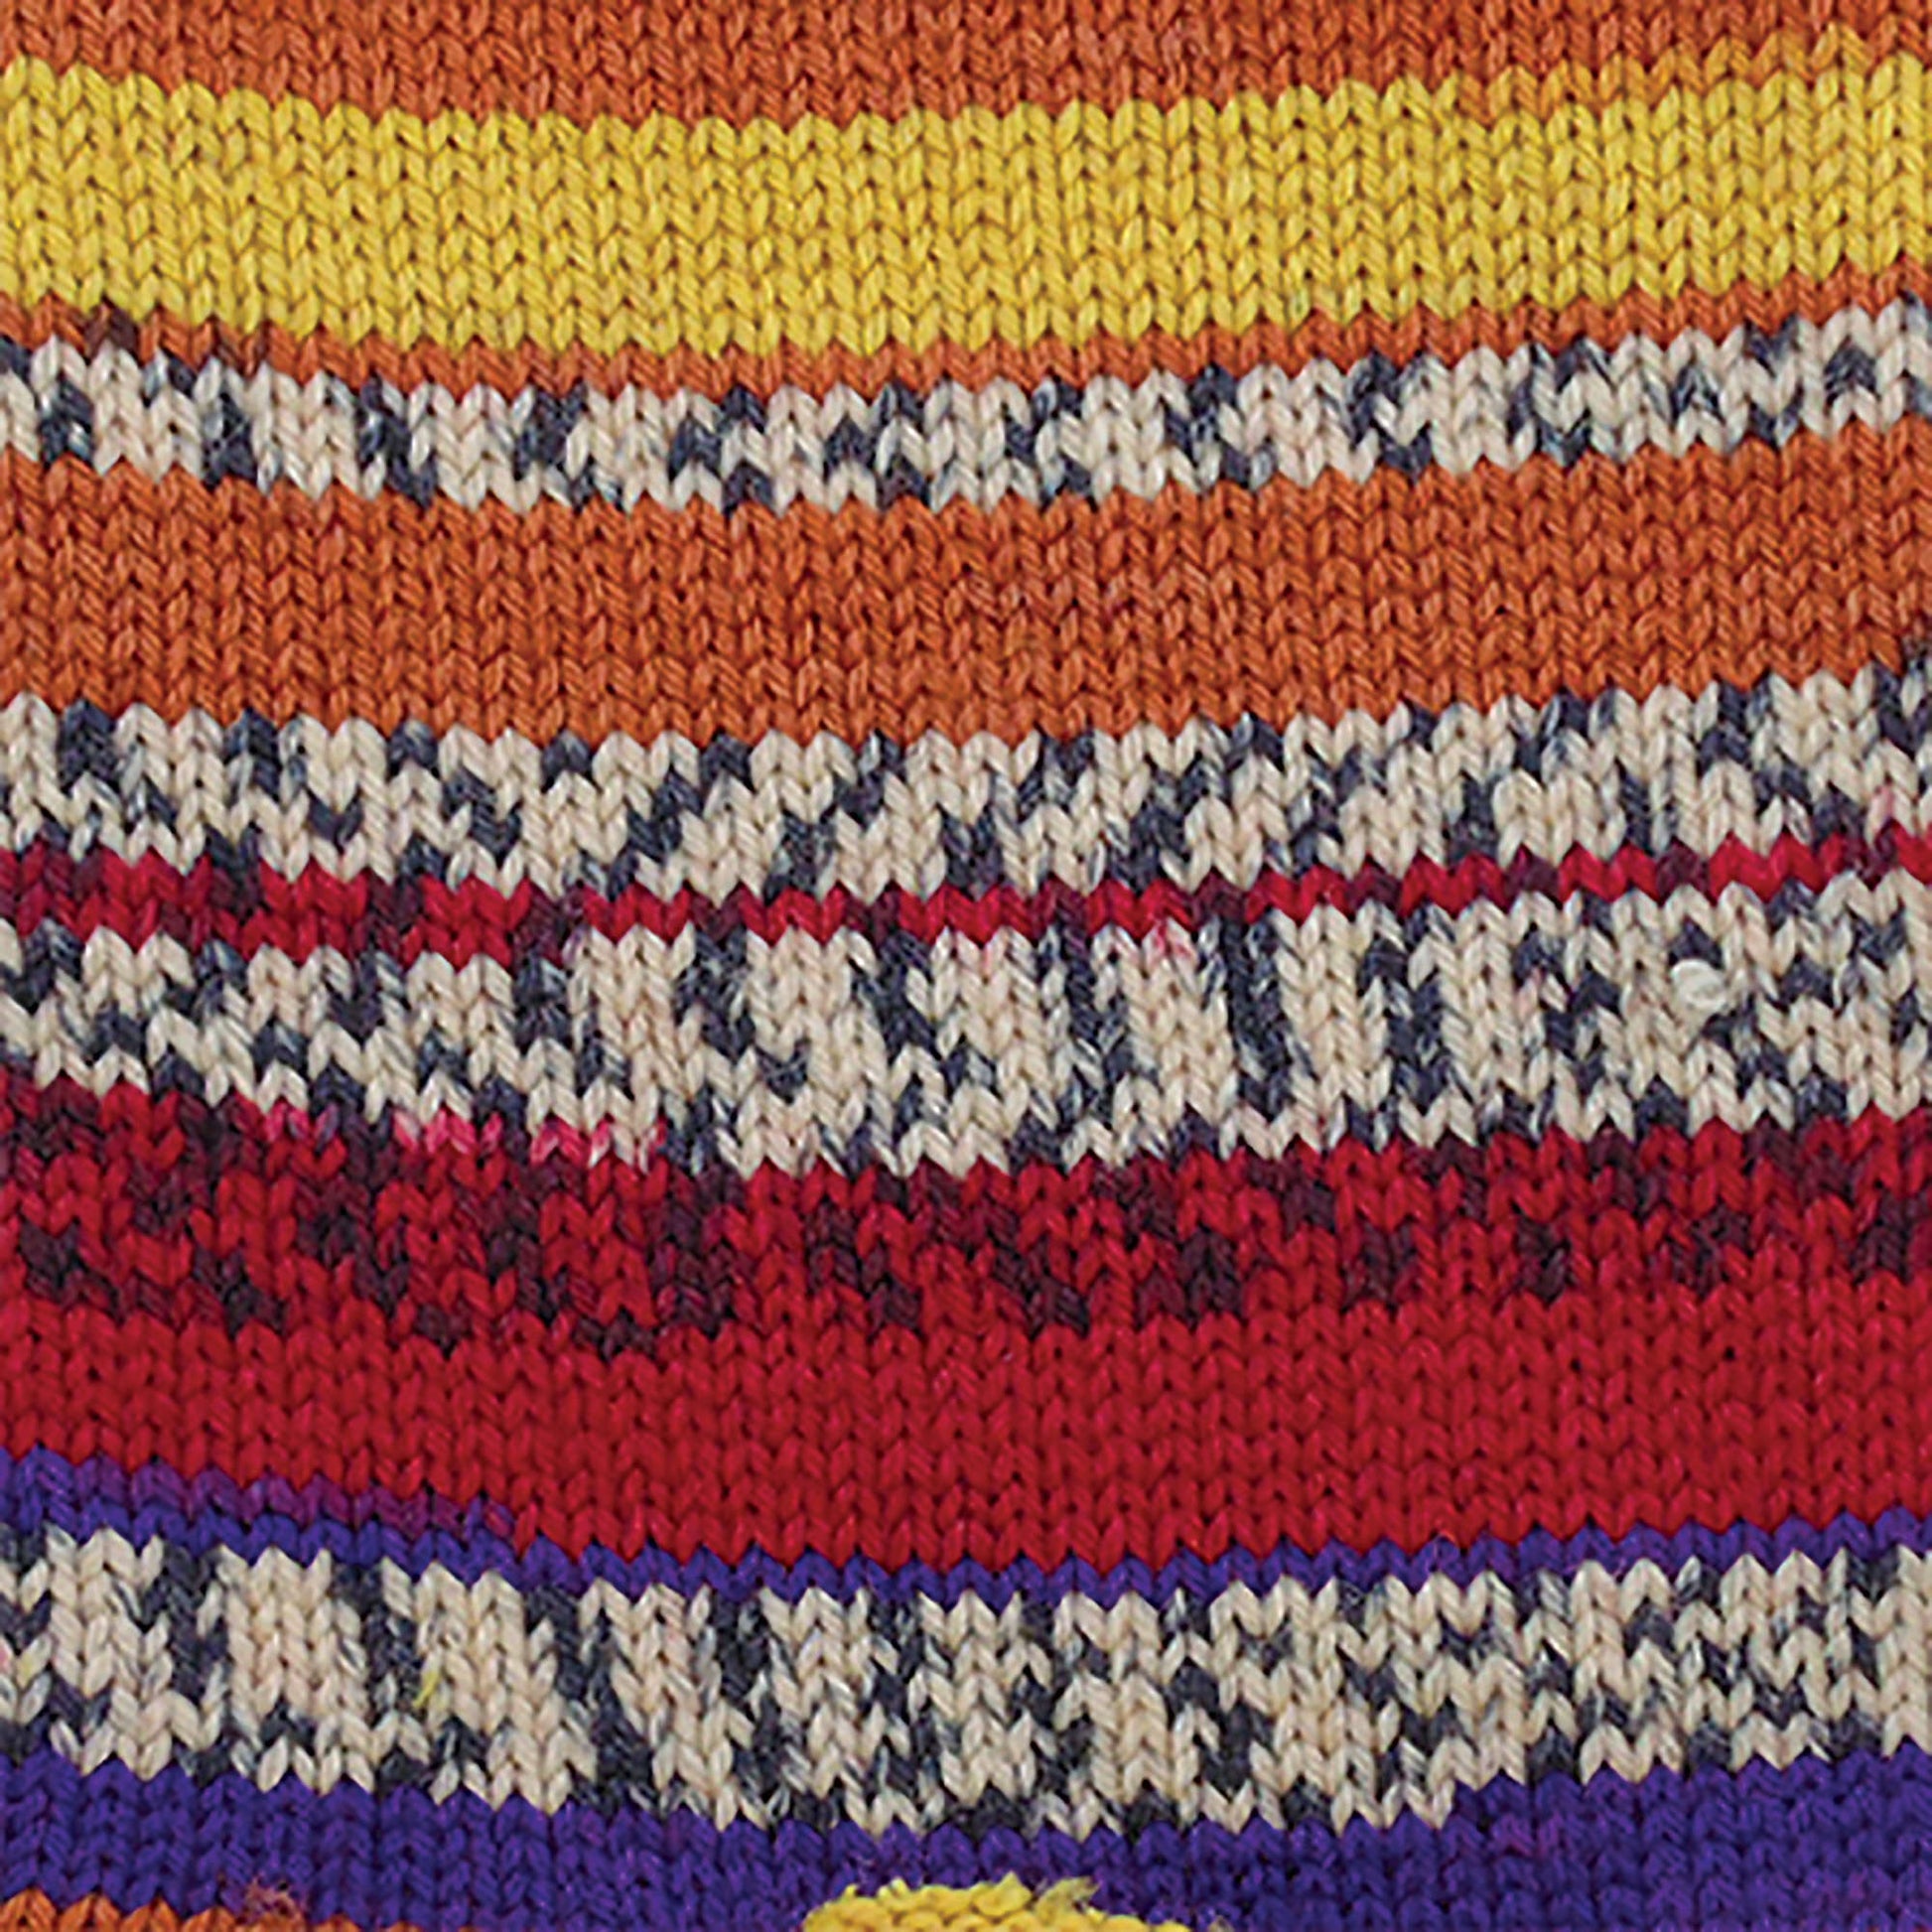 Patons Kroy Socks Yarn Sunset Stripes